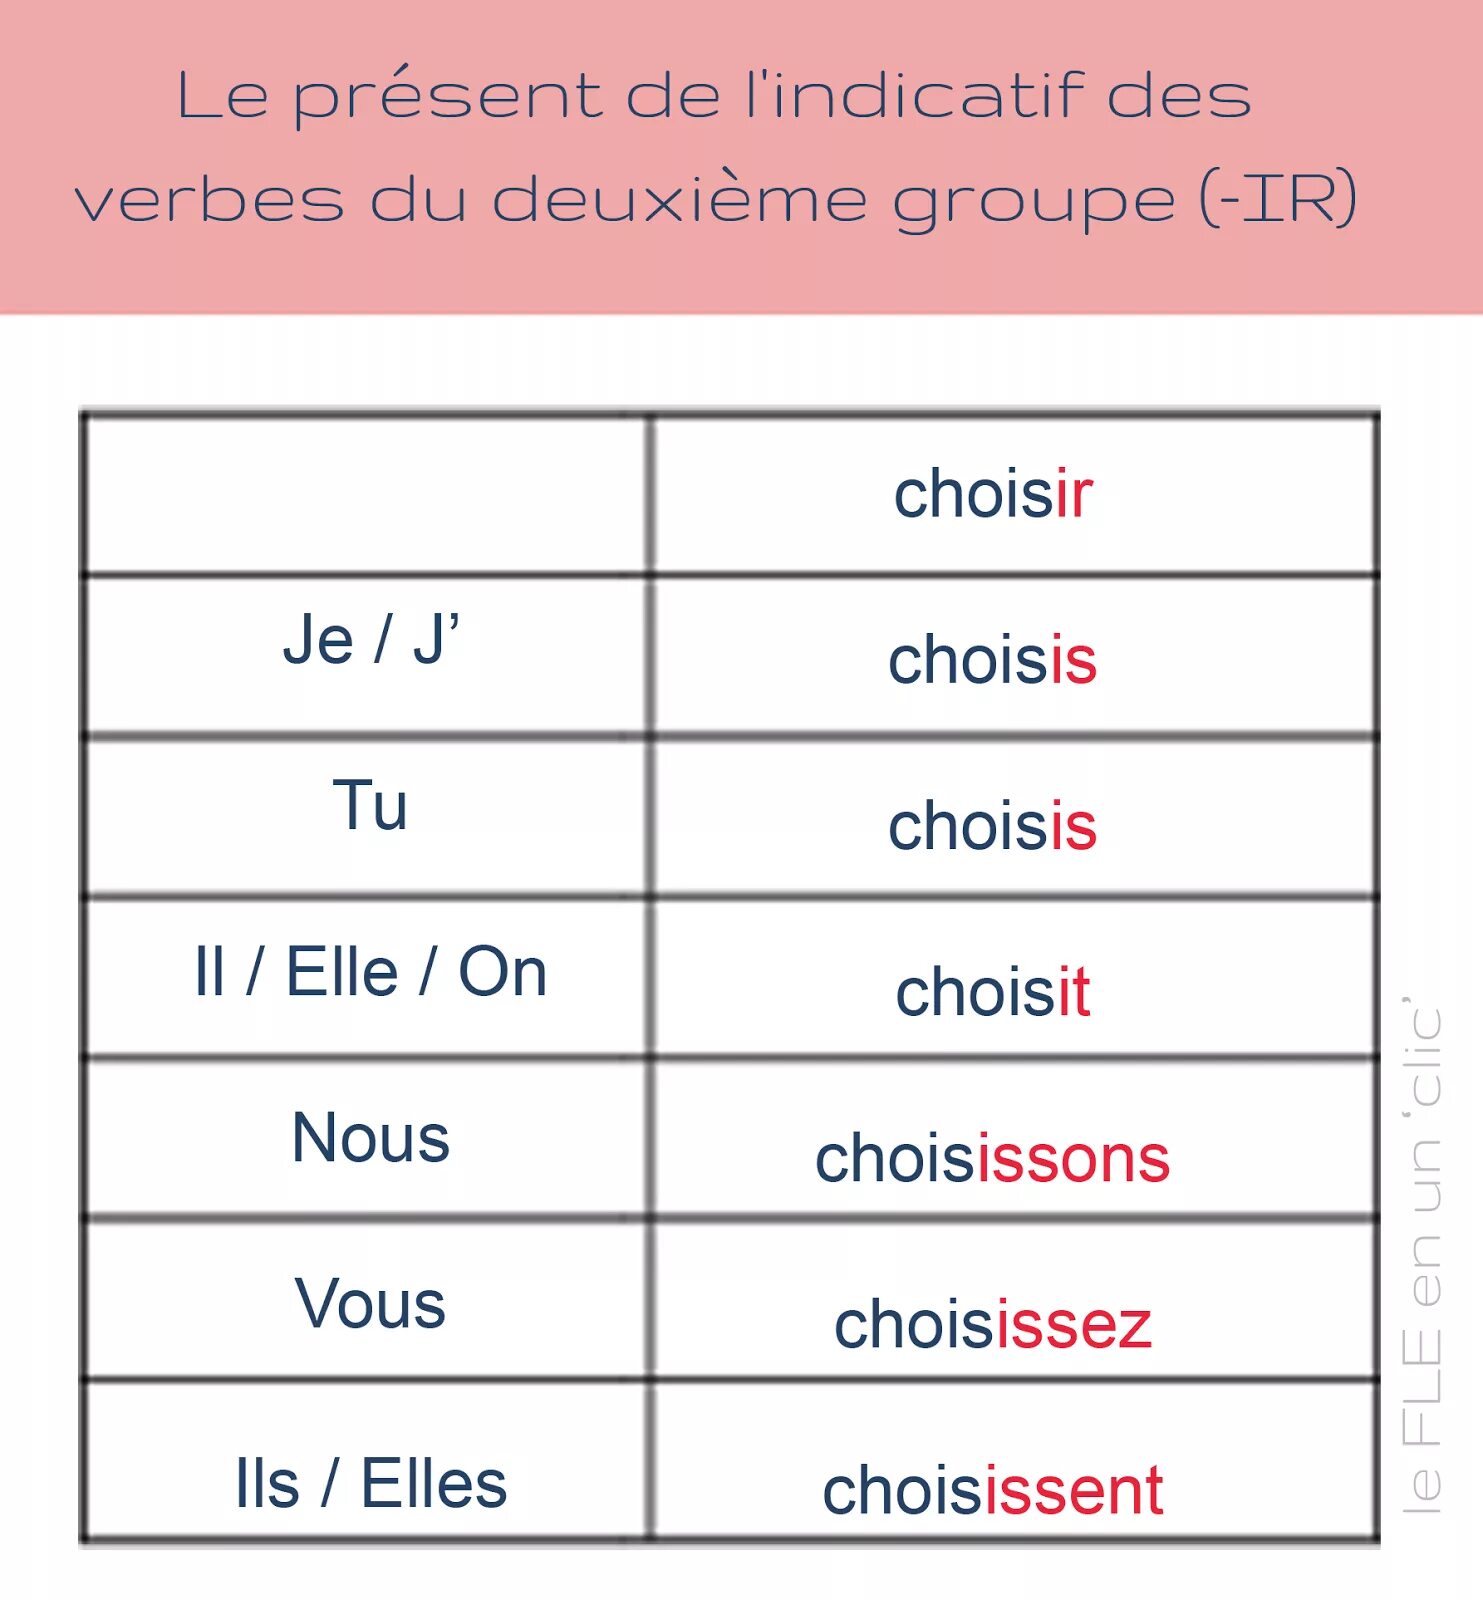 Present indicatif французский. Present de l'indicatif во французском языке. Les verbes 2 groupe французский. Le present во французском языке.